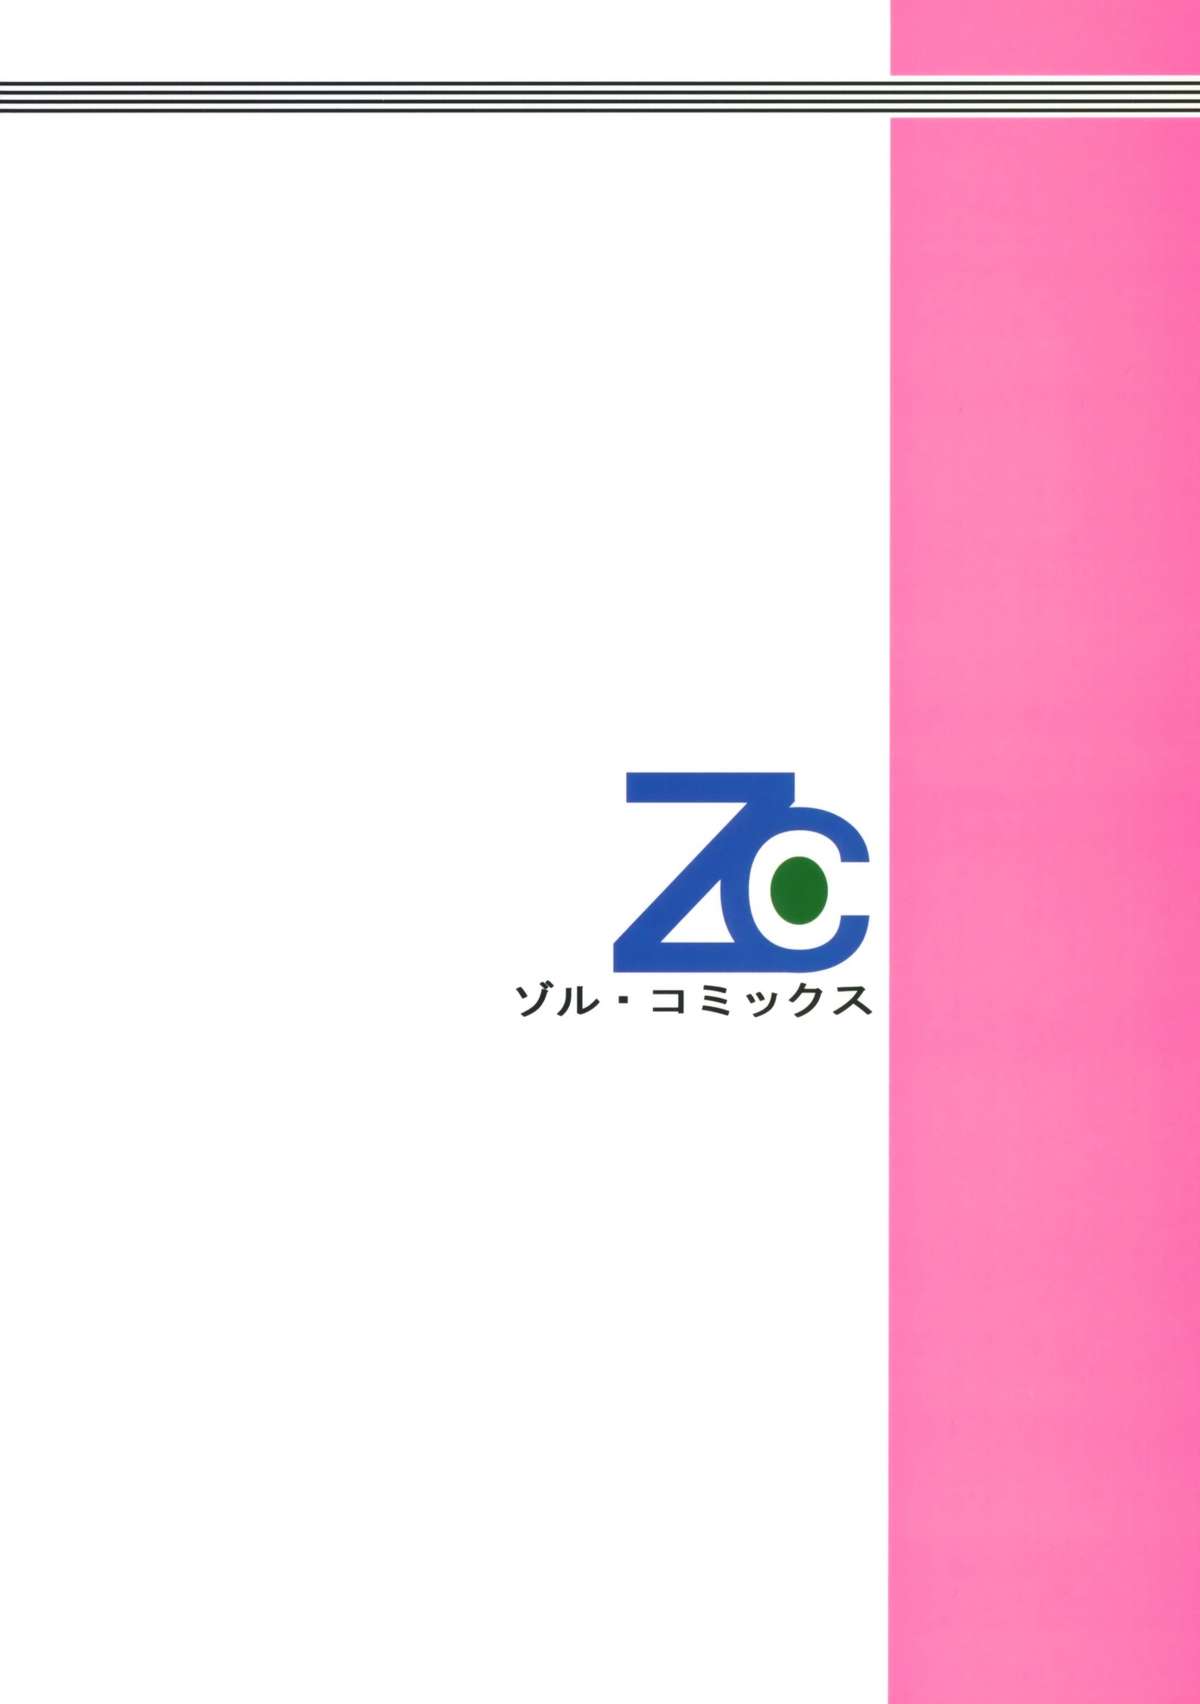 [VETO (ZOL)] J-Heroines (舞って!セーラー服騎士、変幻戦忍アスカ) [2009年6月10日]